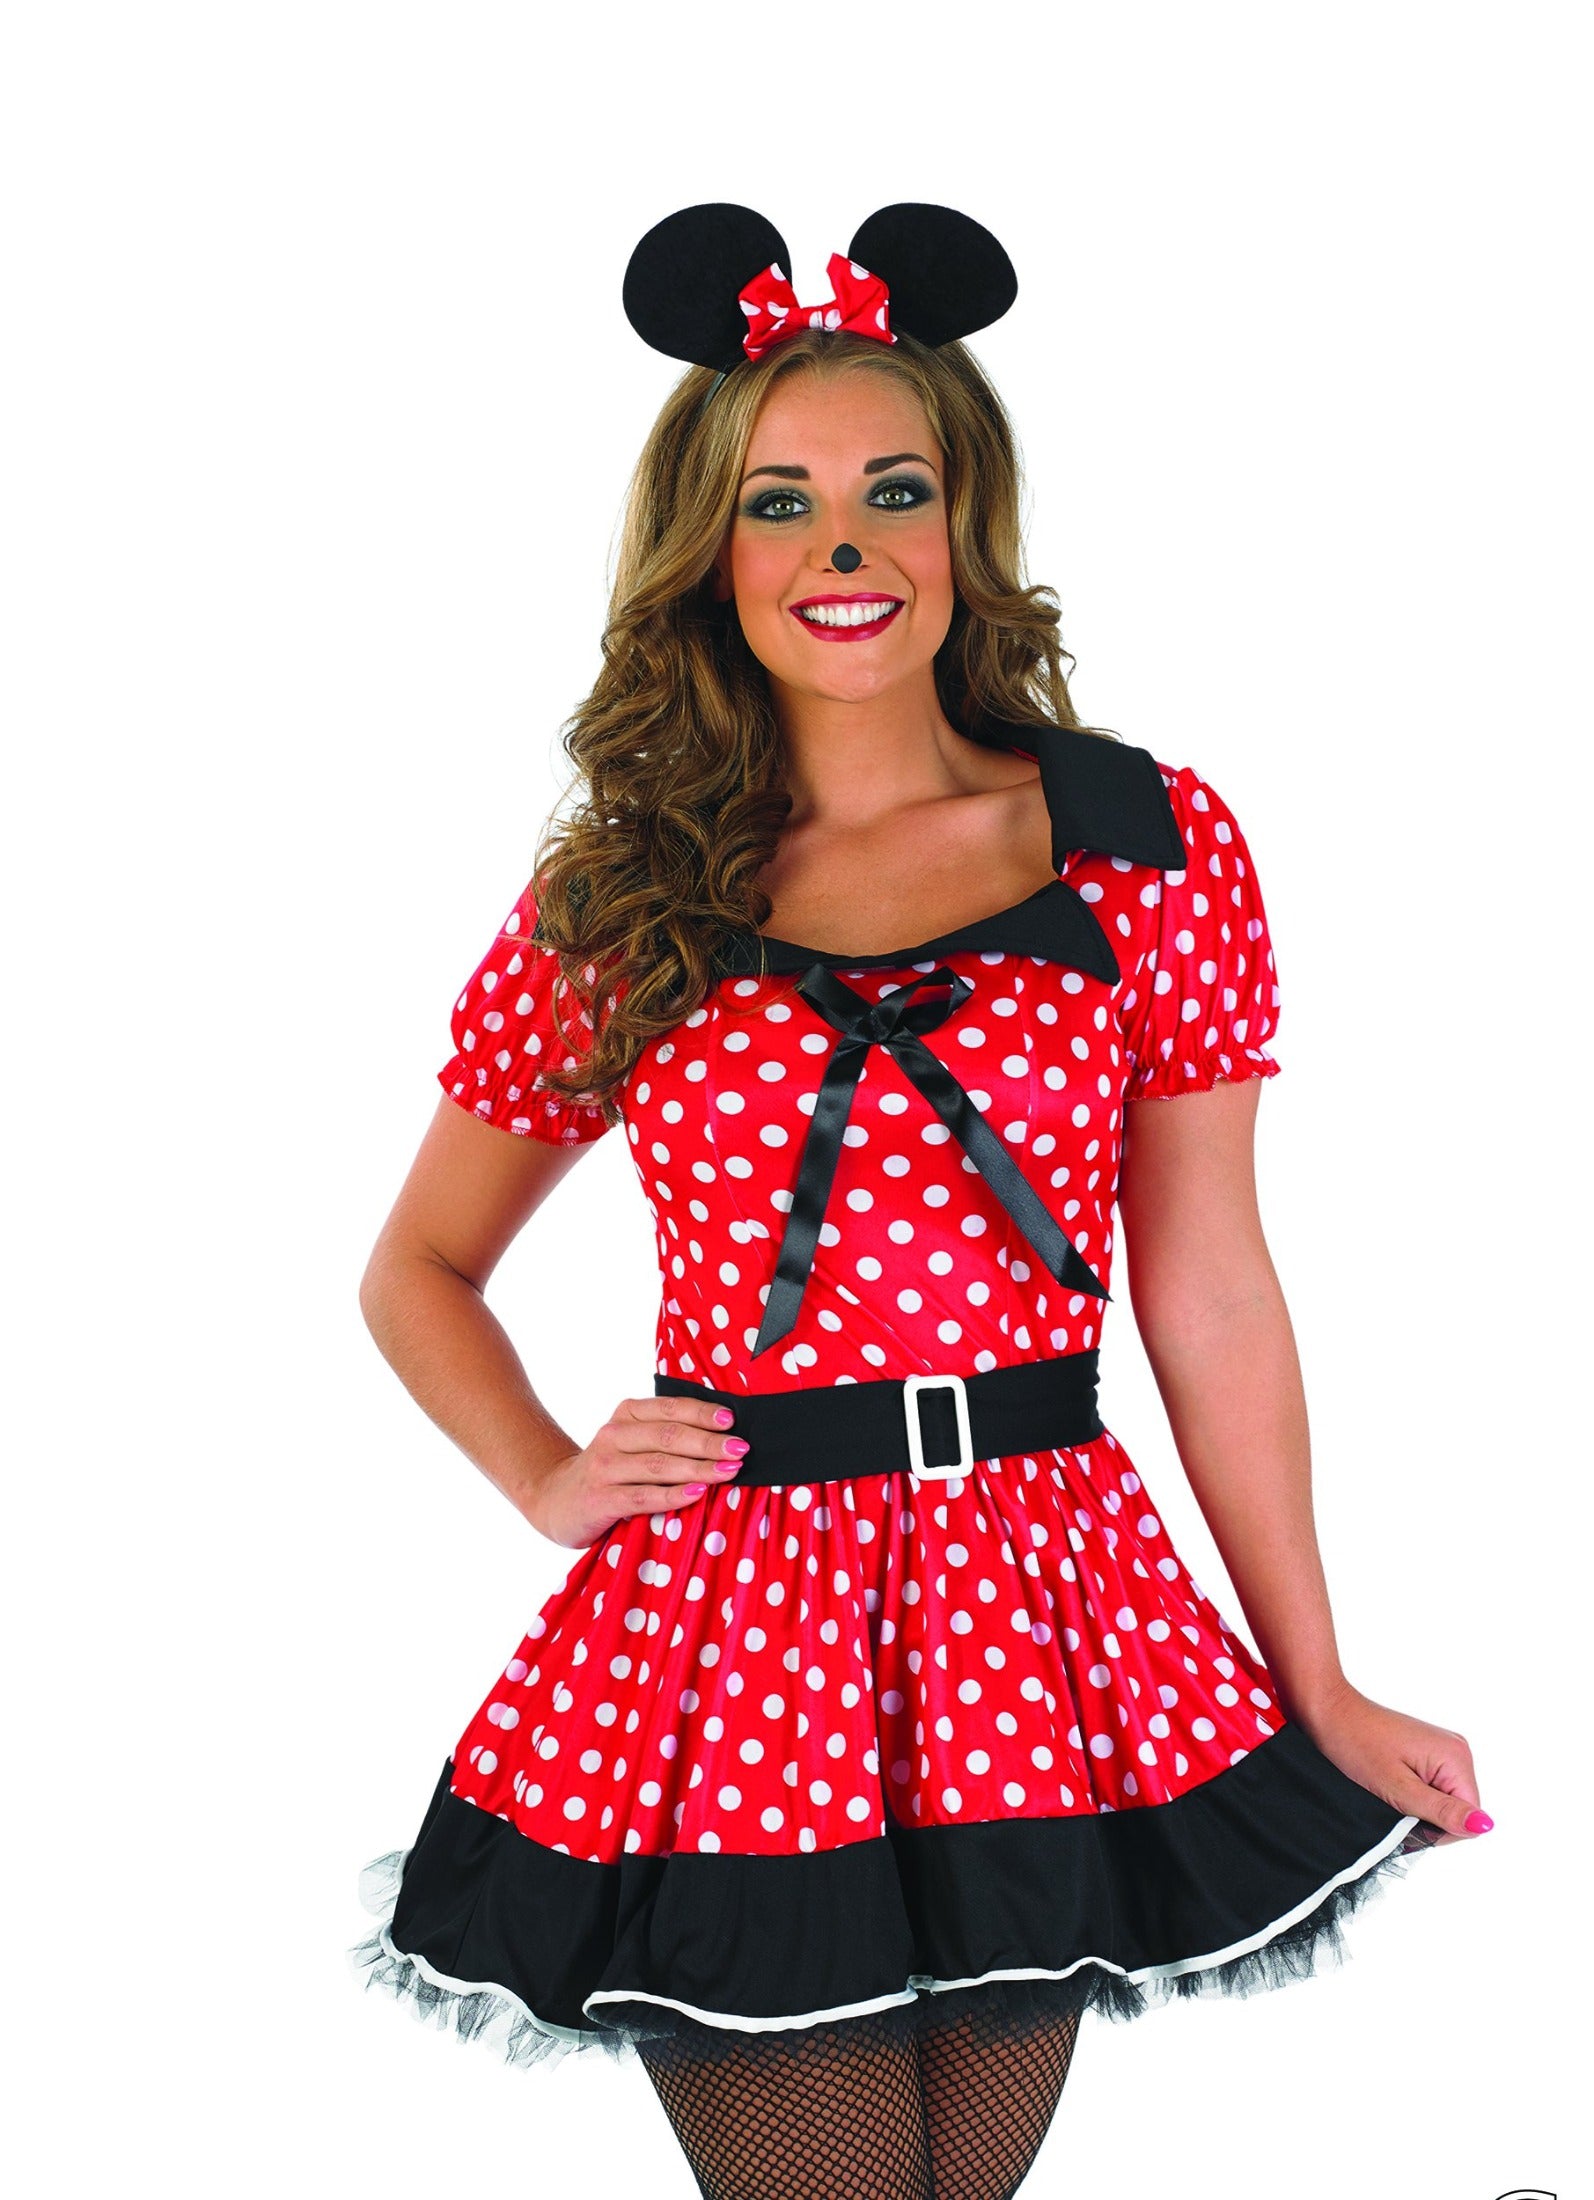 Ladies Missy Minnie Mouse fancy dress costume.